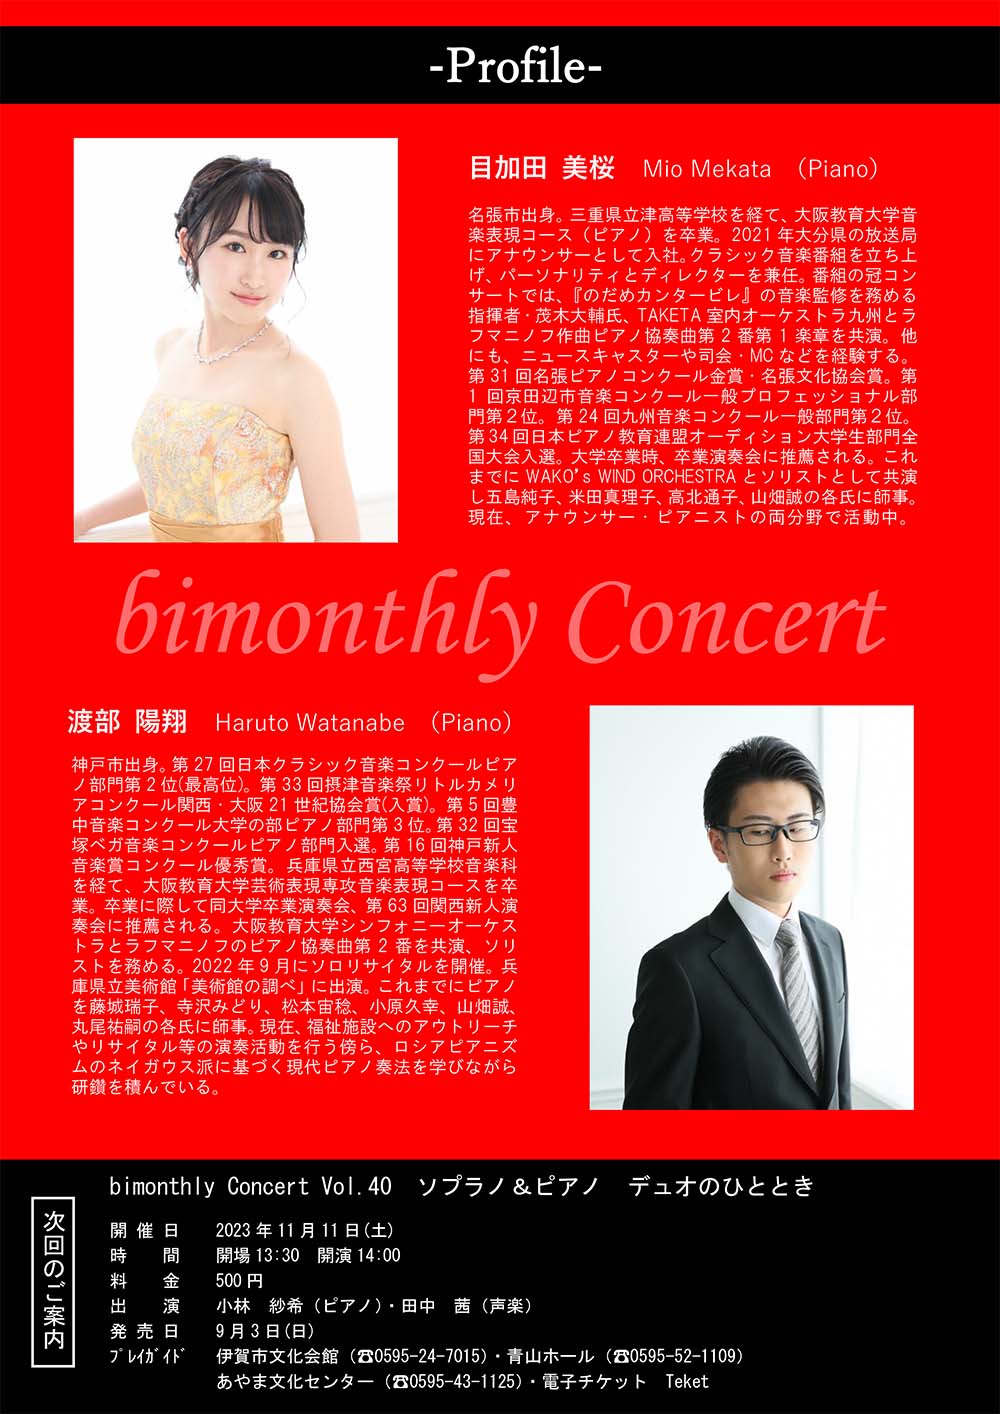 bimonthly Concert Vol.39 ピアノ・ジョイントリサイタル